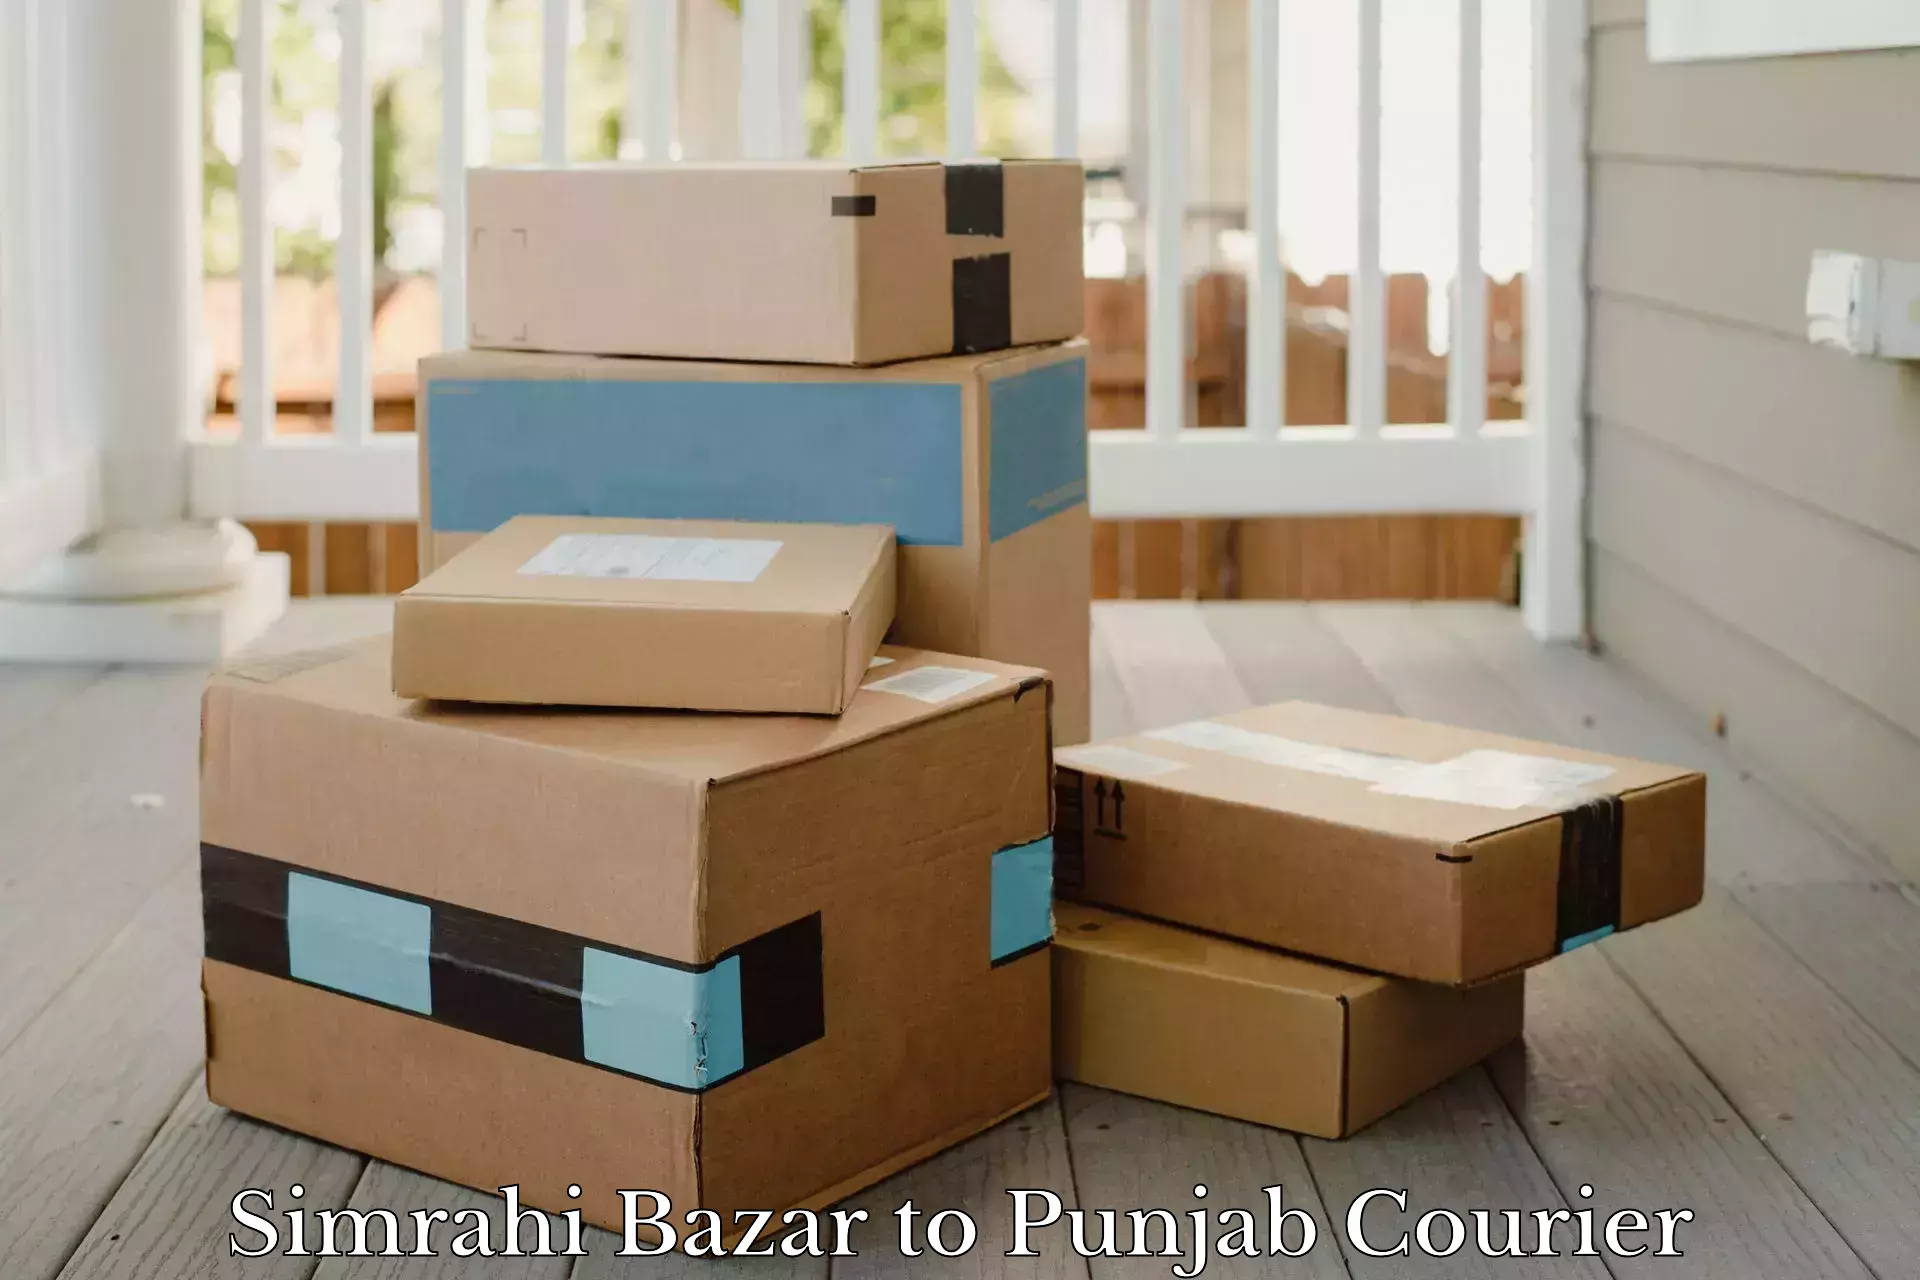 Logistics service provider Simrahi Bazar to Punjab